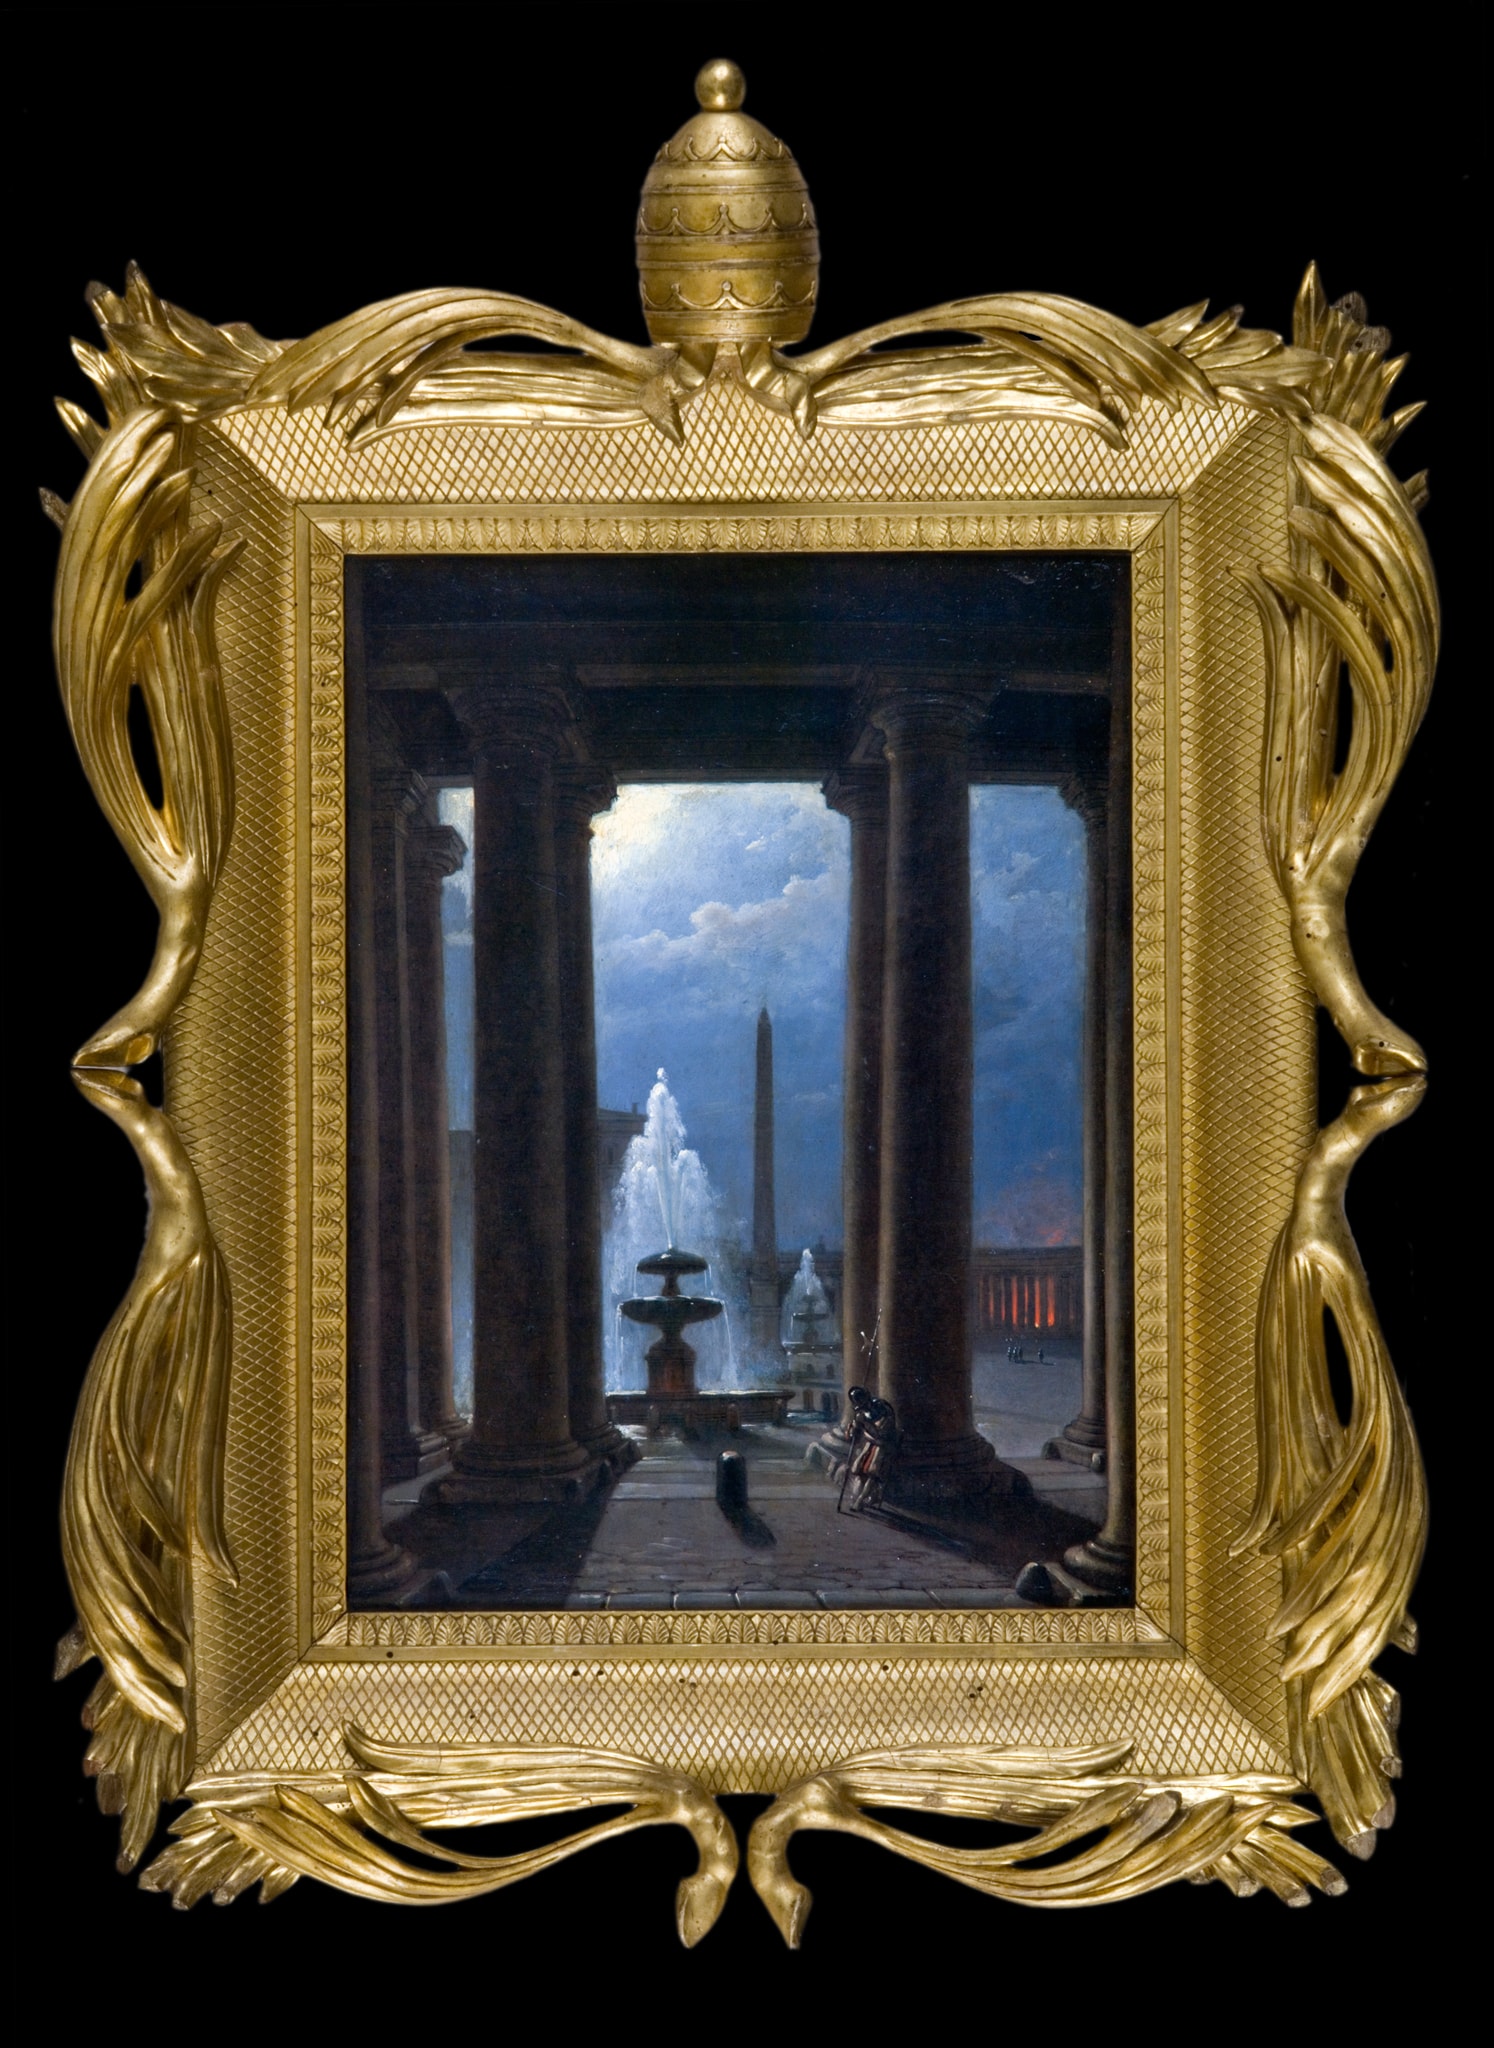 Franz Ludwig Catel (Berlino 1778 - Roma 1856) "Veduta notturna di piazza San Pietro", 1818 circa. Olio su tela, 35 x 26,5 cm